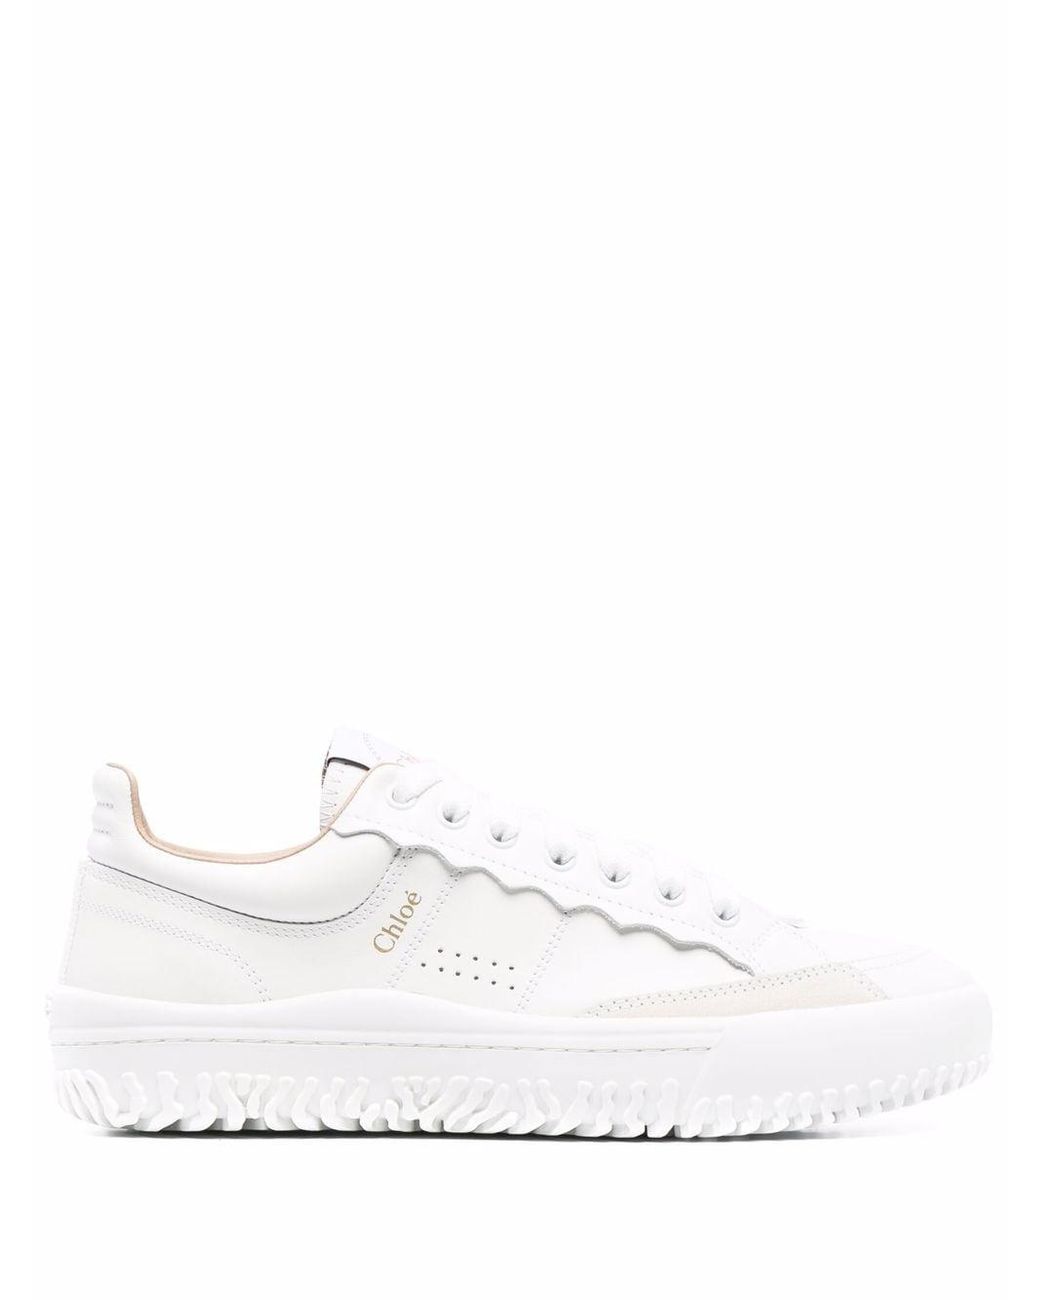 Chloé Frankie Low-top Sneakers in White | Lyst